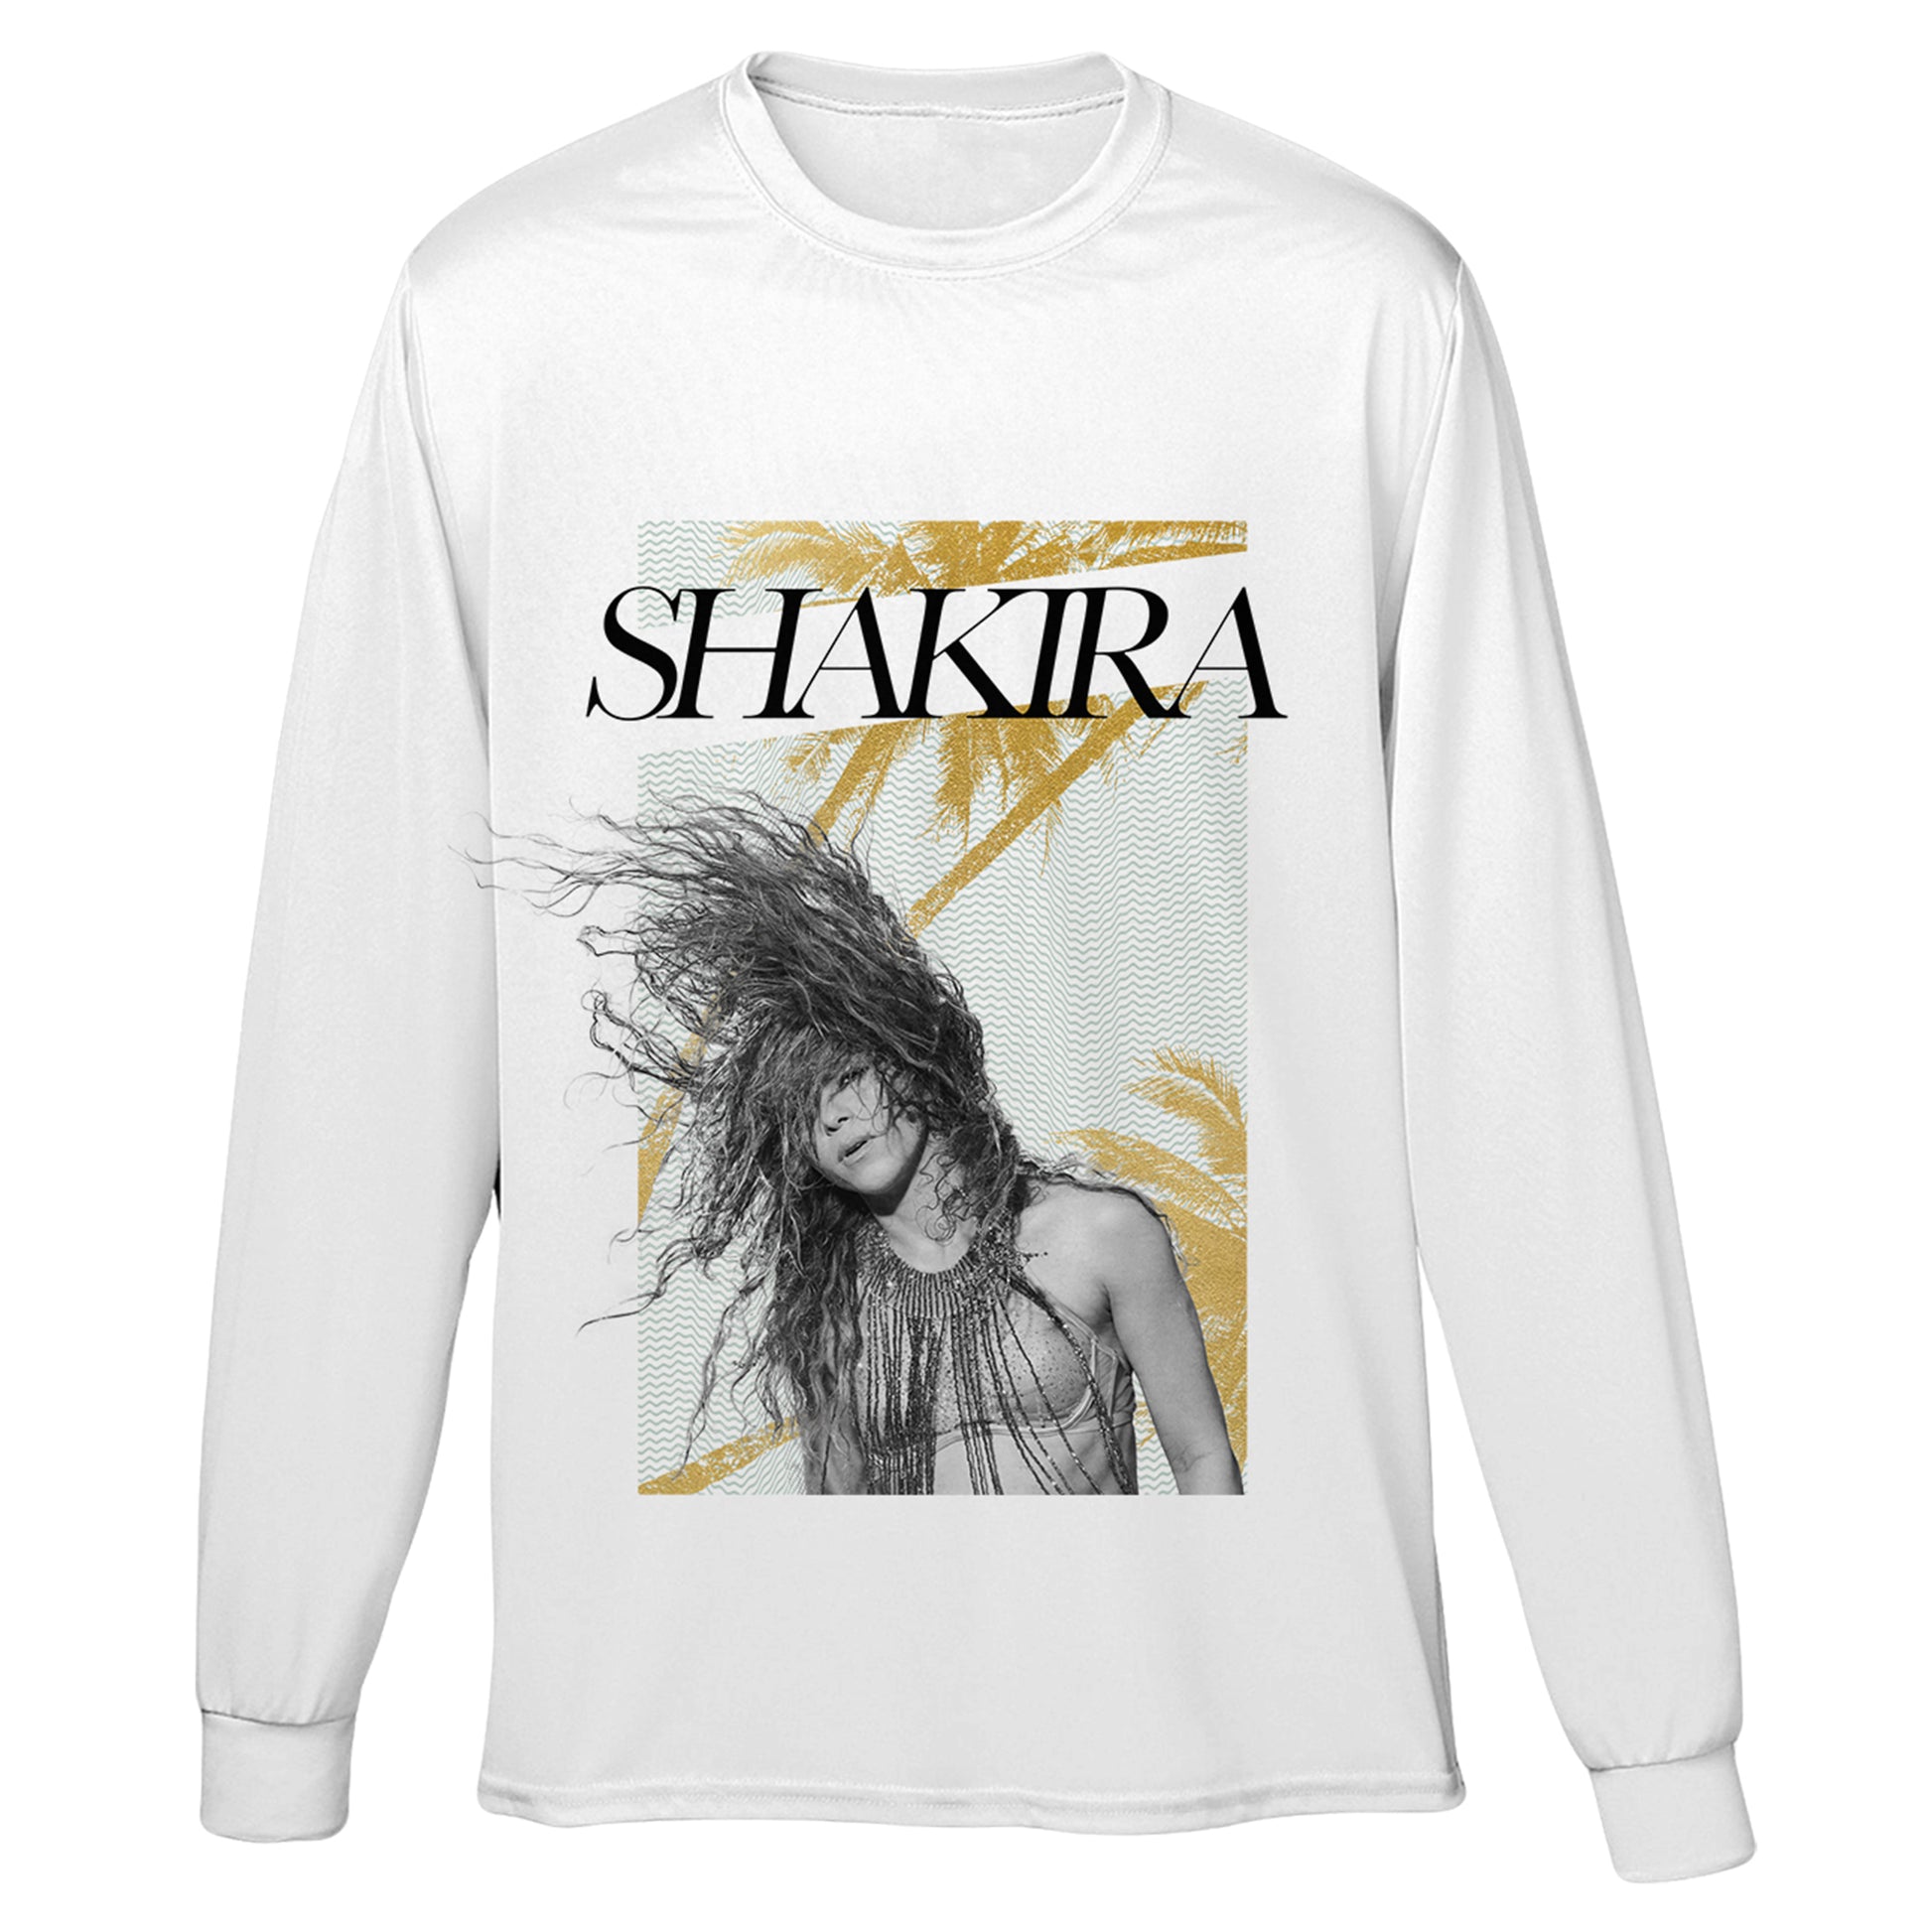 Shakira Photo Long Sleeve Tee - Shakira